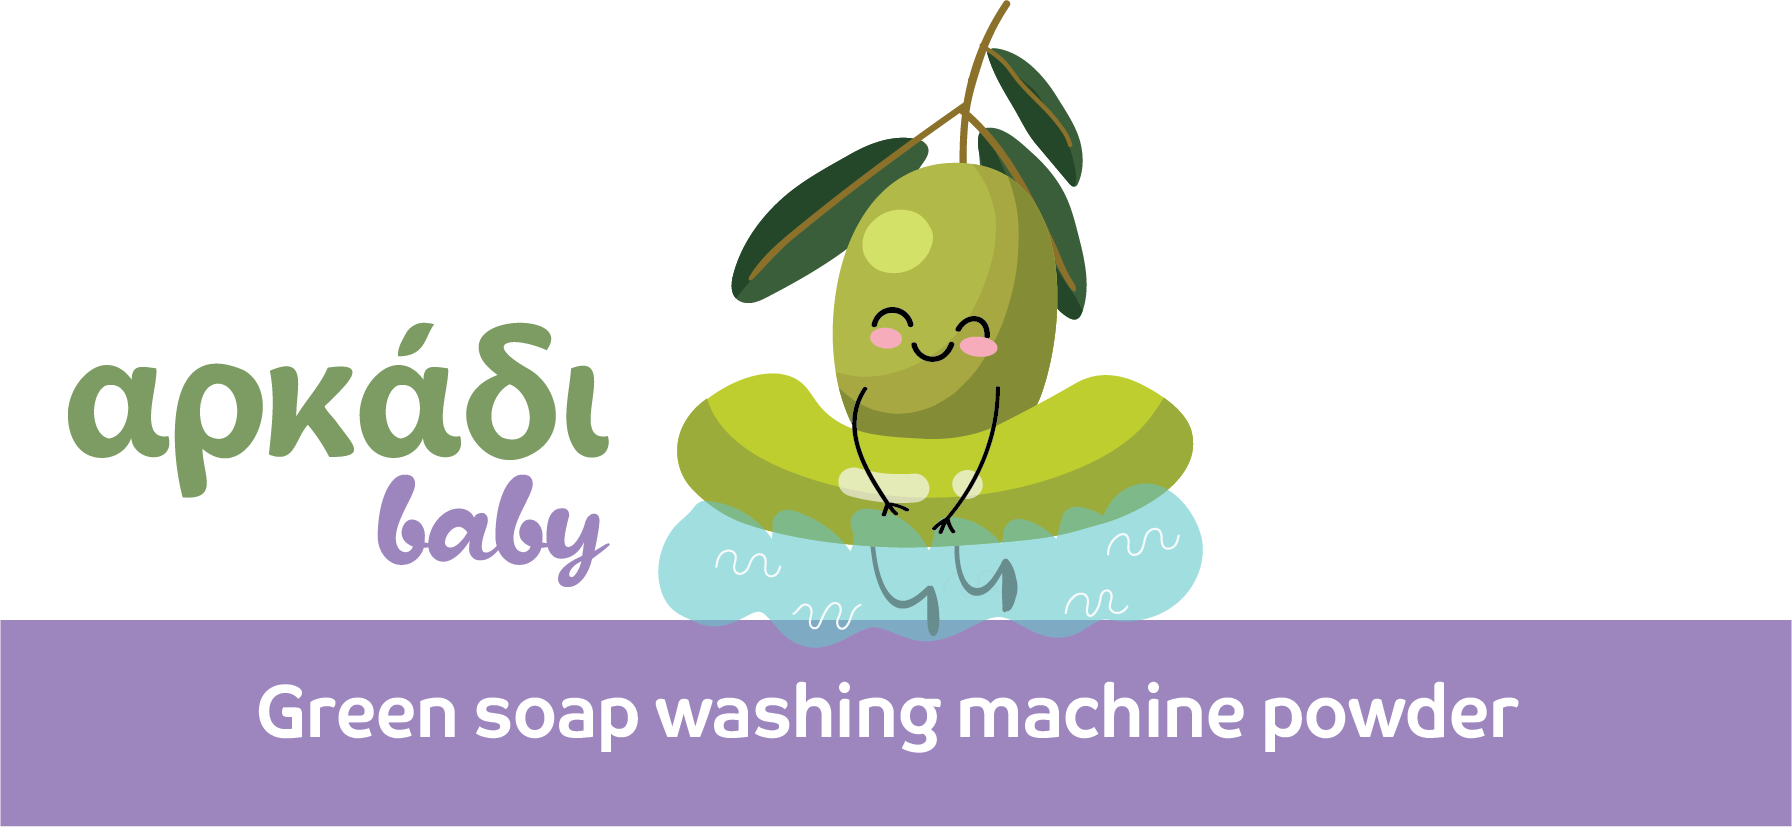 Arkadi Baby Green Soap Powder for the Washing Machine